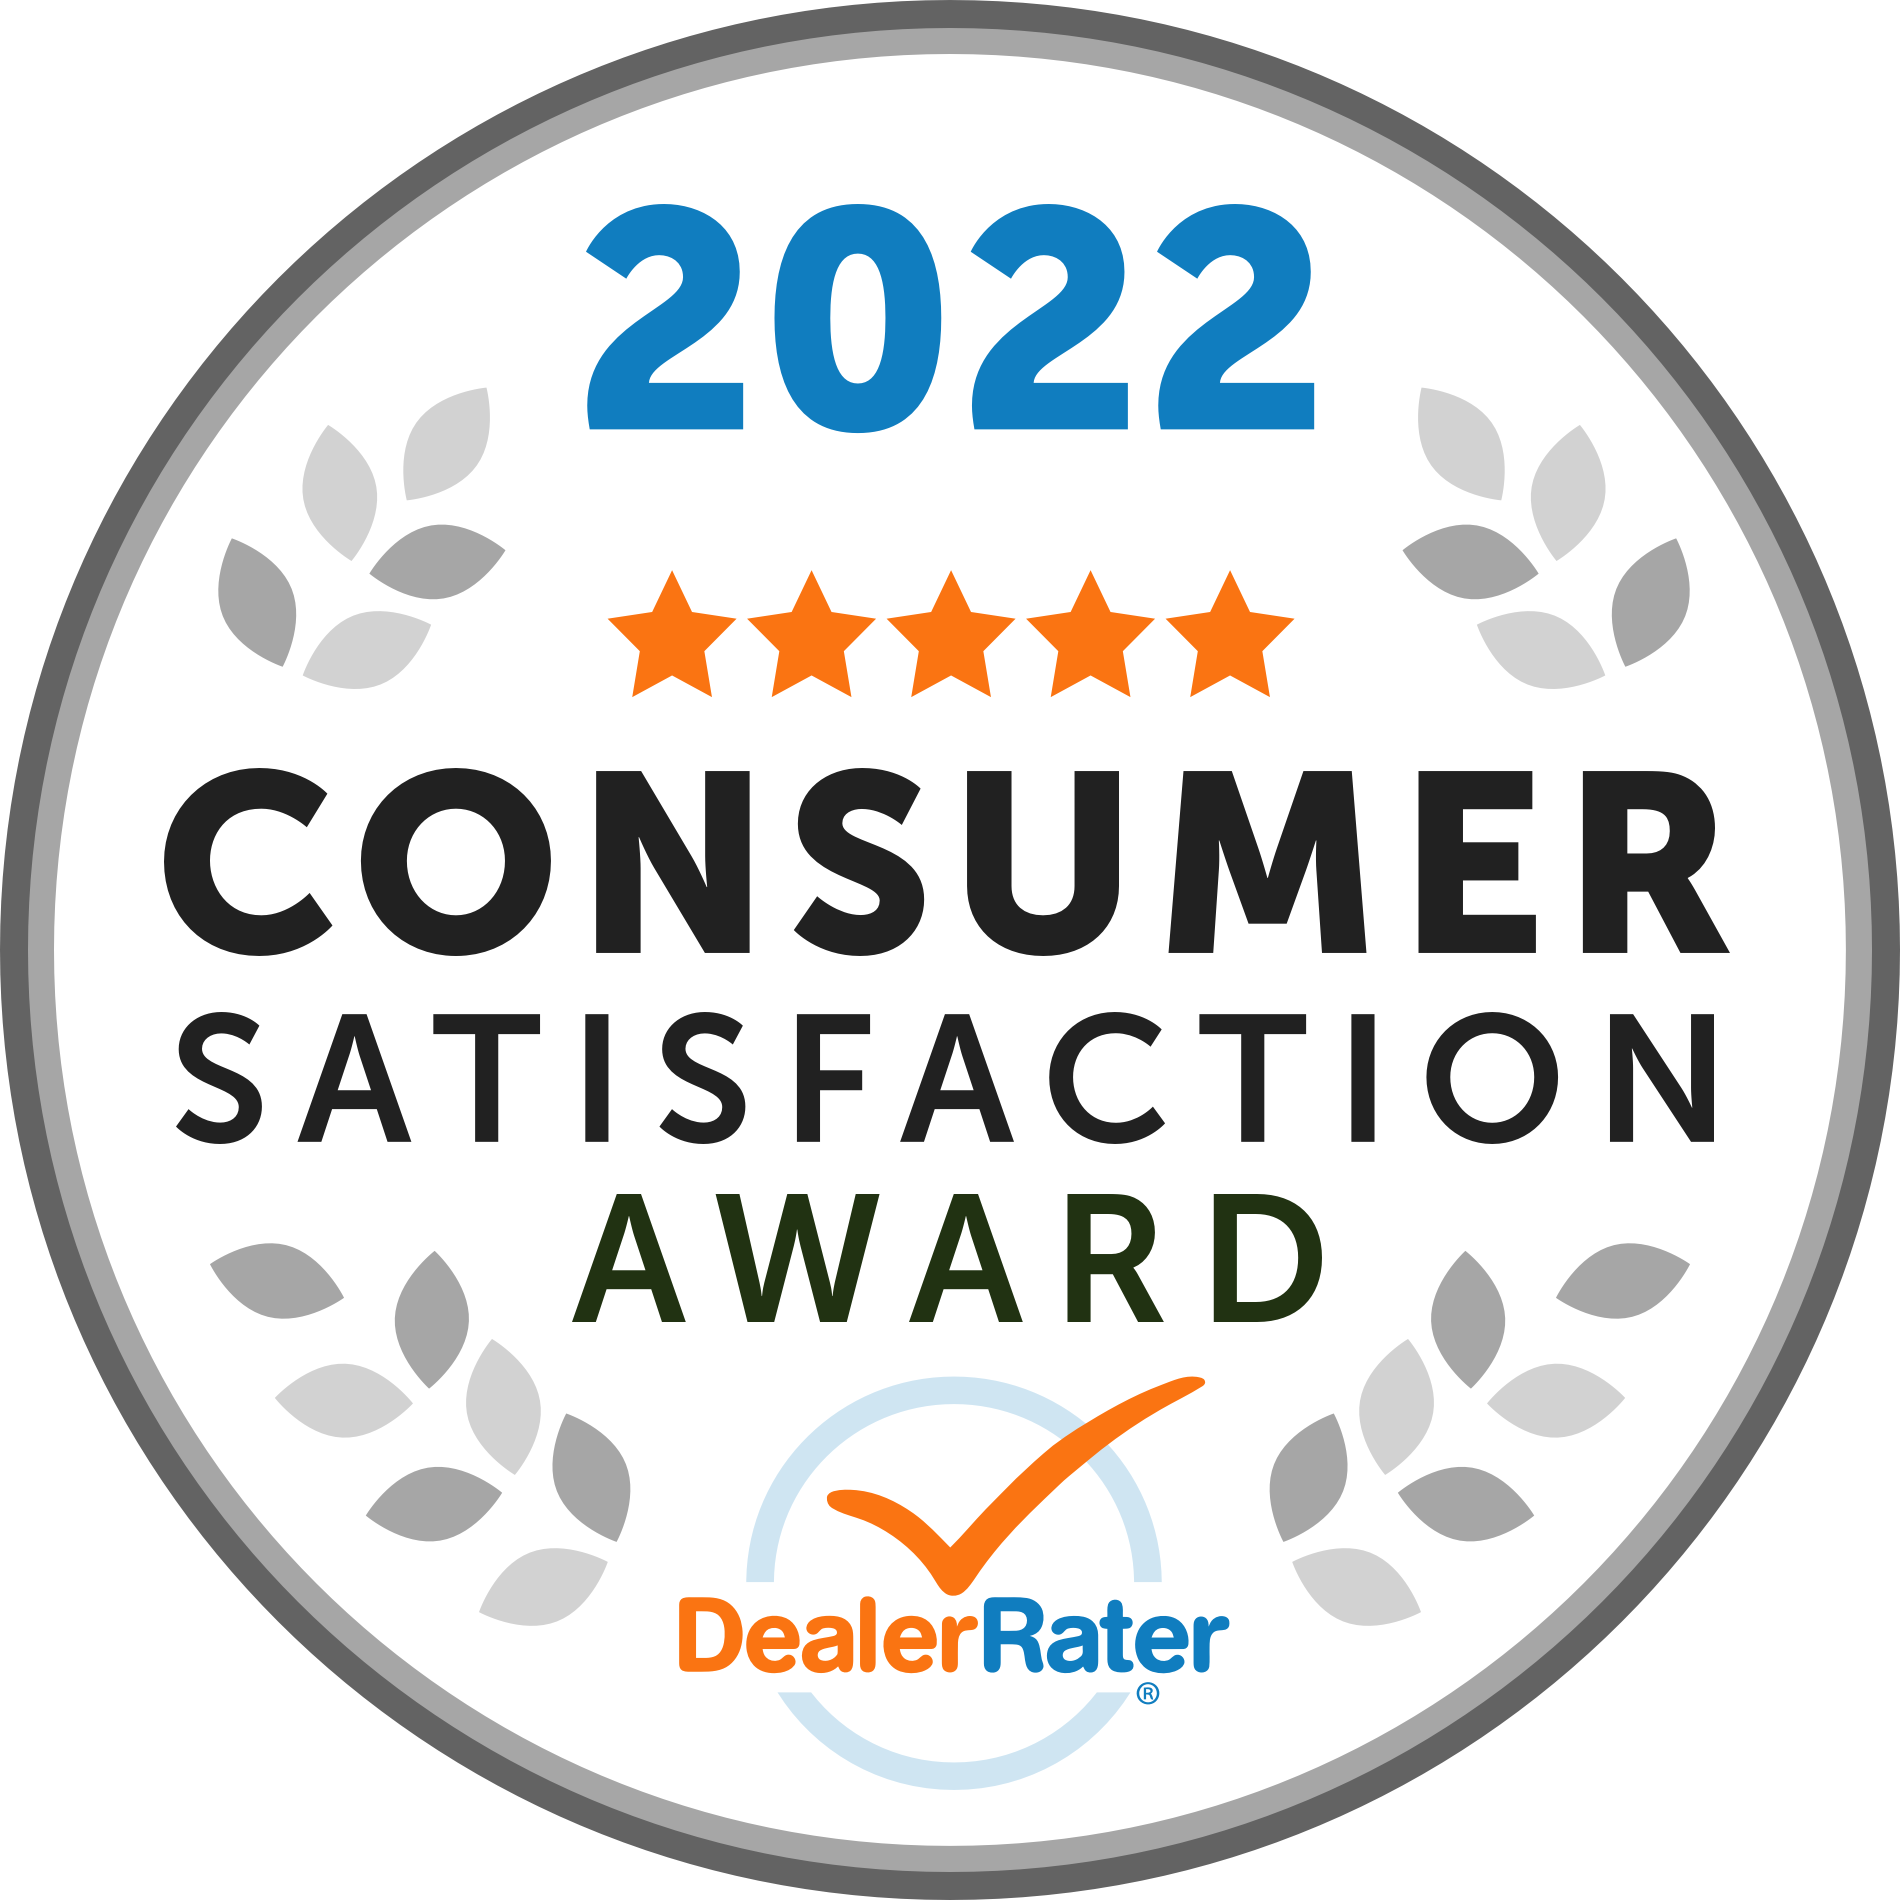 2022 Consumer Satisfaction Award - DealerRater | Weber Chevrolet in St. Louis MO